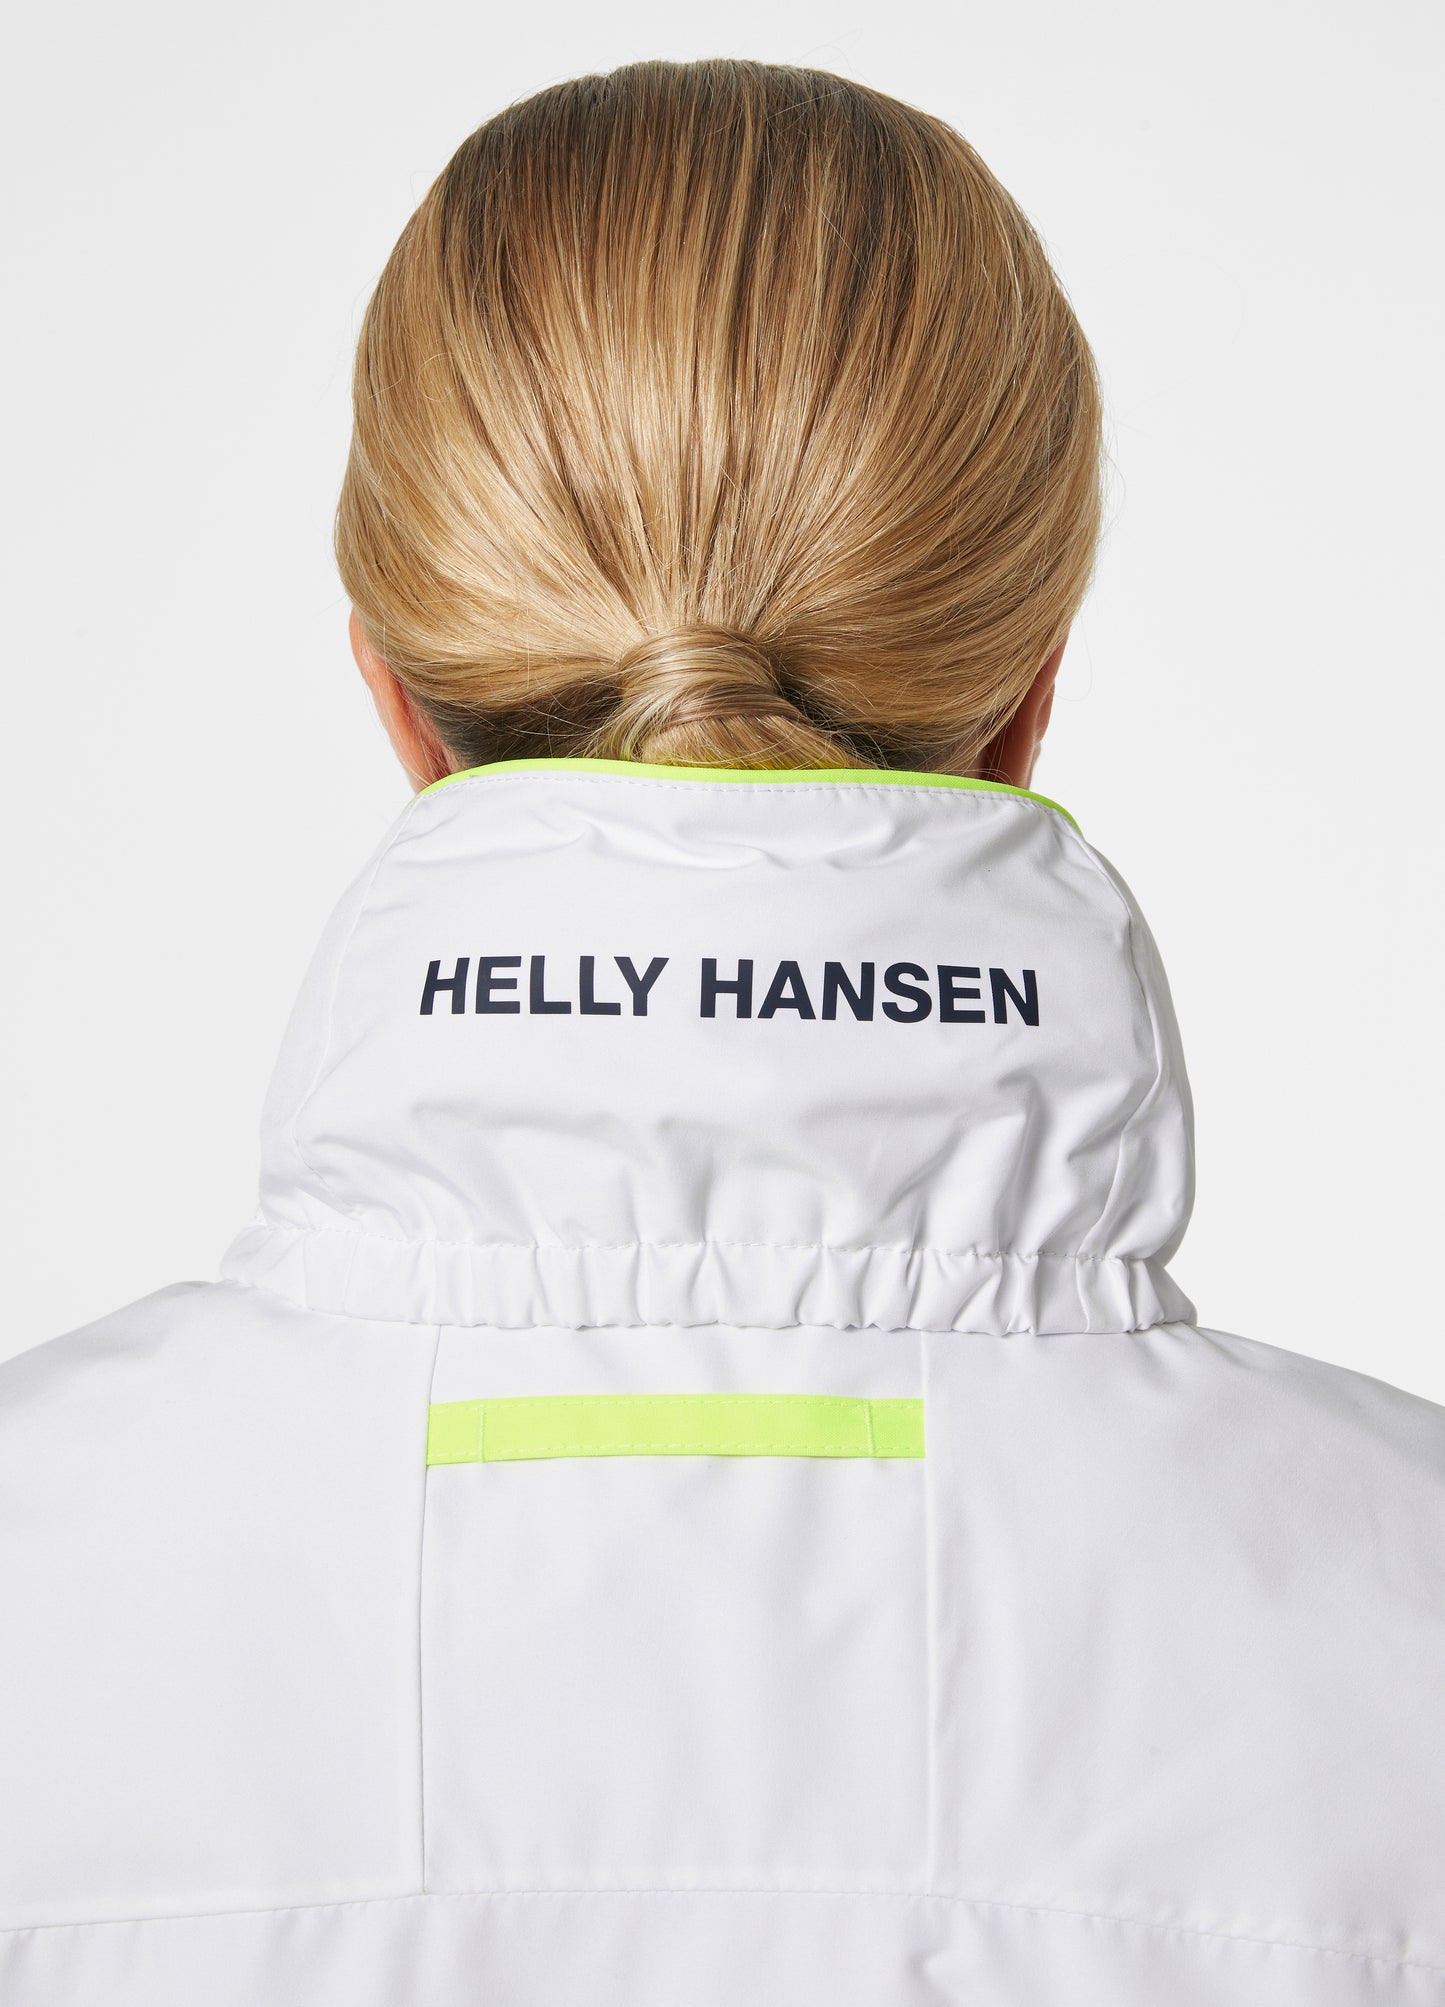 Helly Hansen Women's Newport Inshore Sailing Jacket